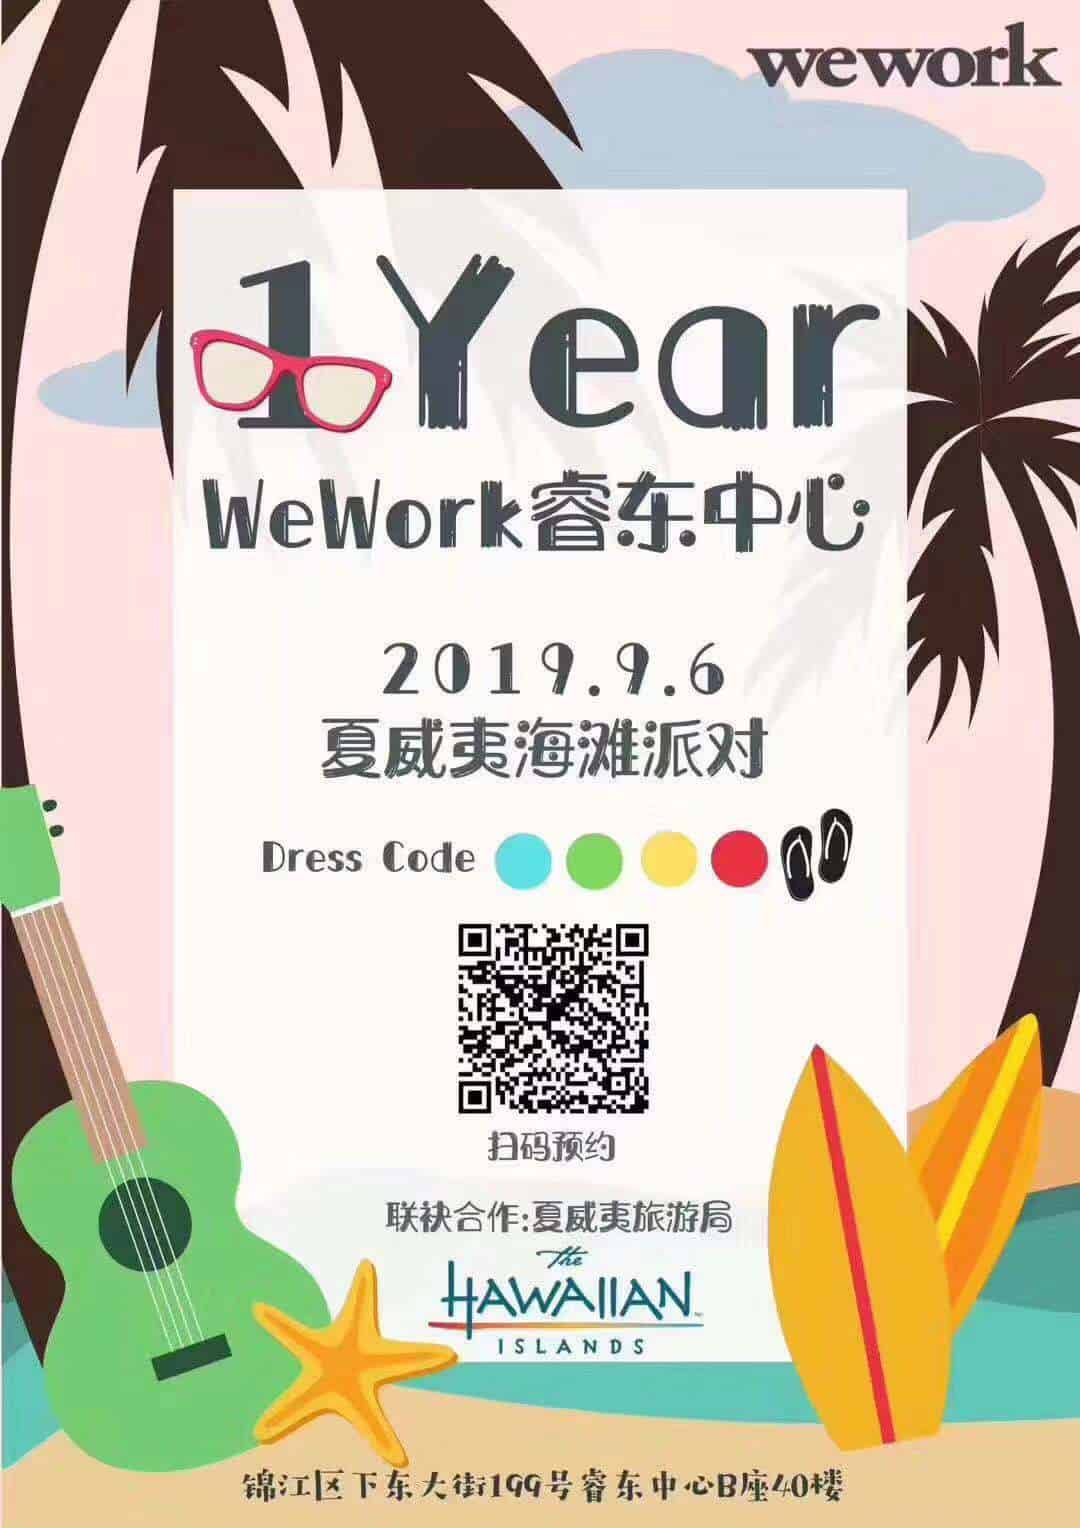 WeChat Image 20190904102250 1